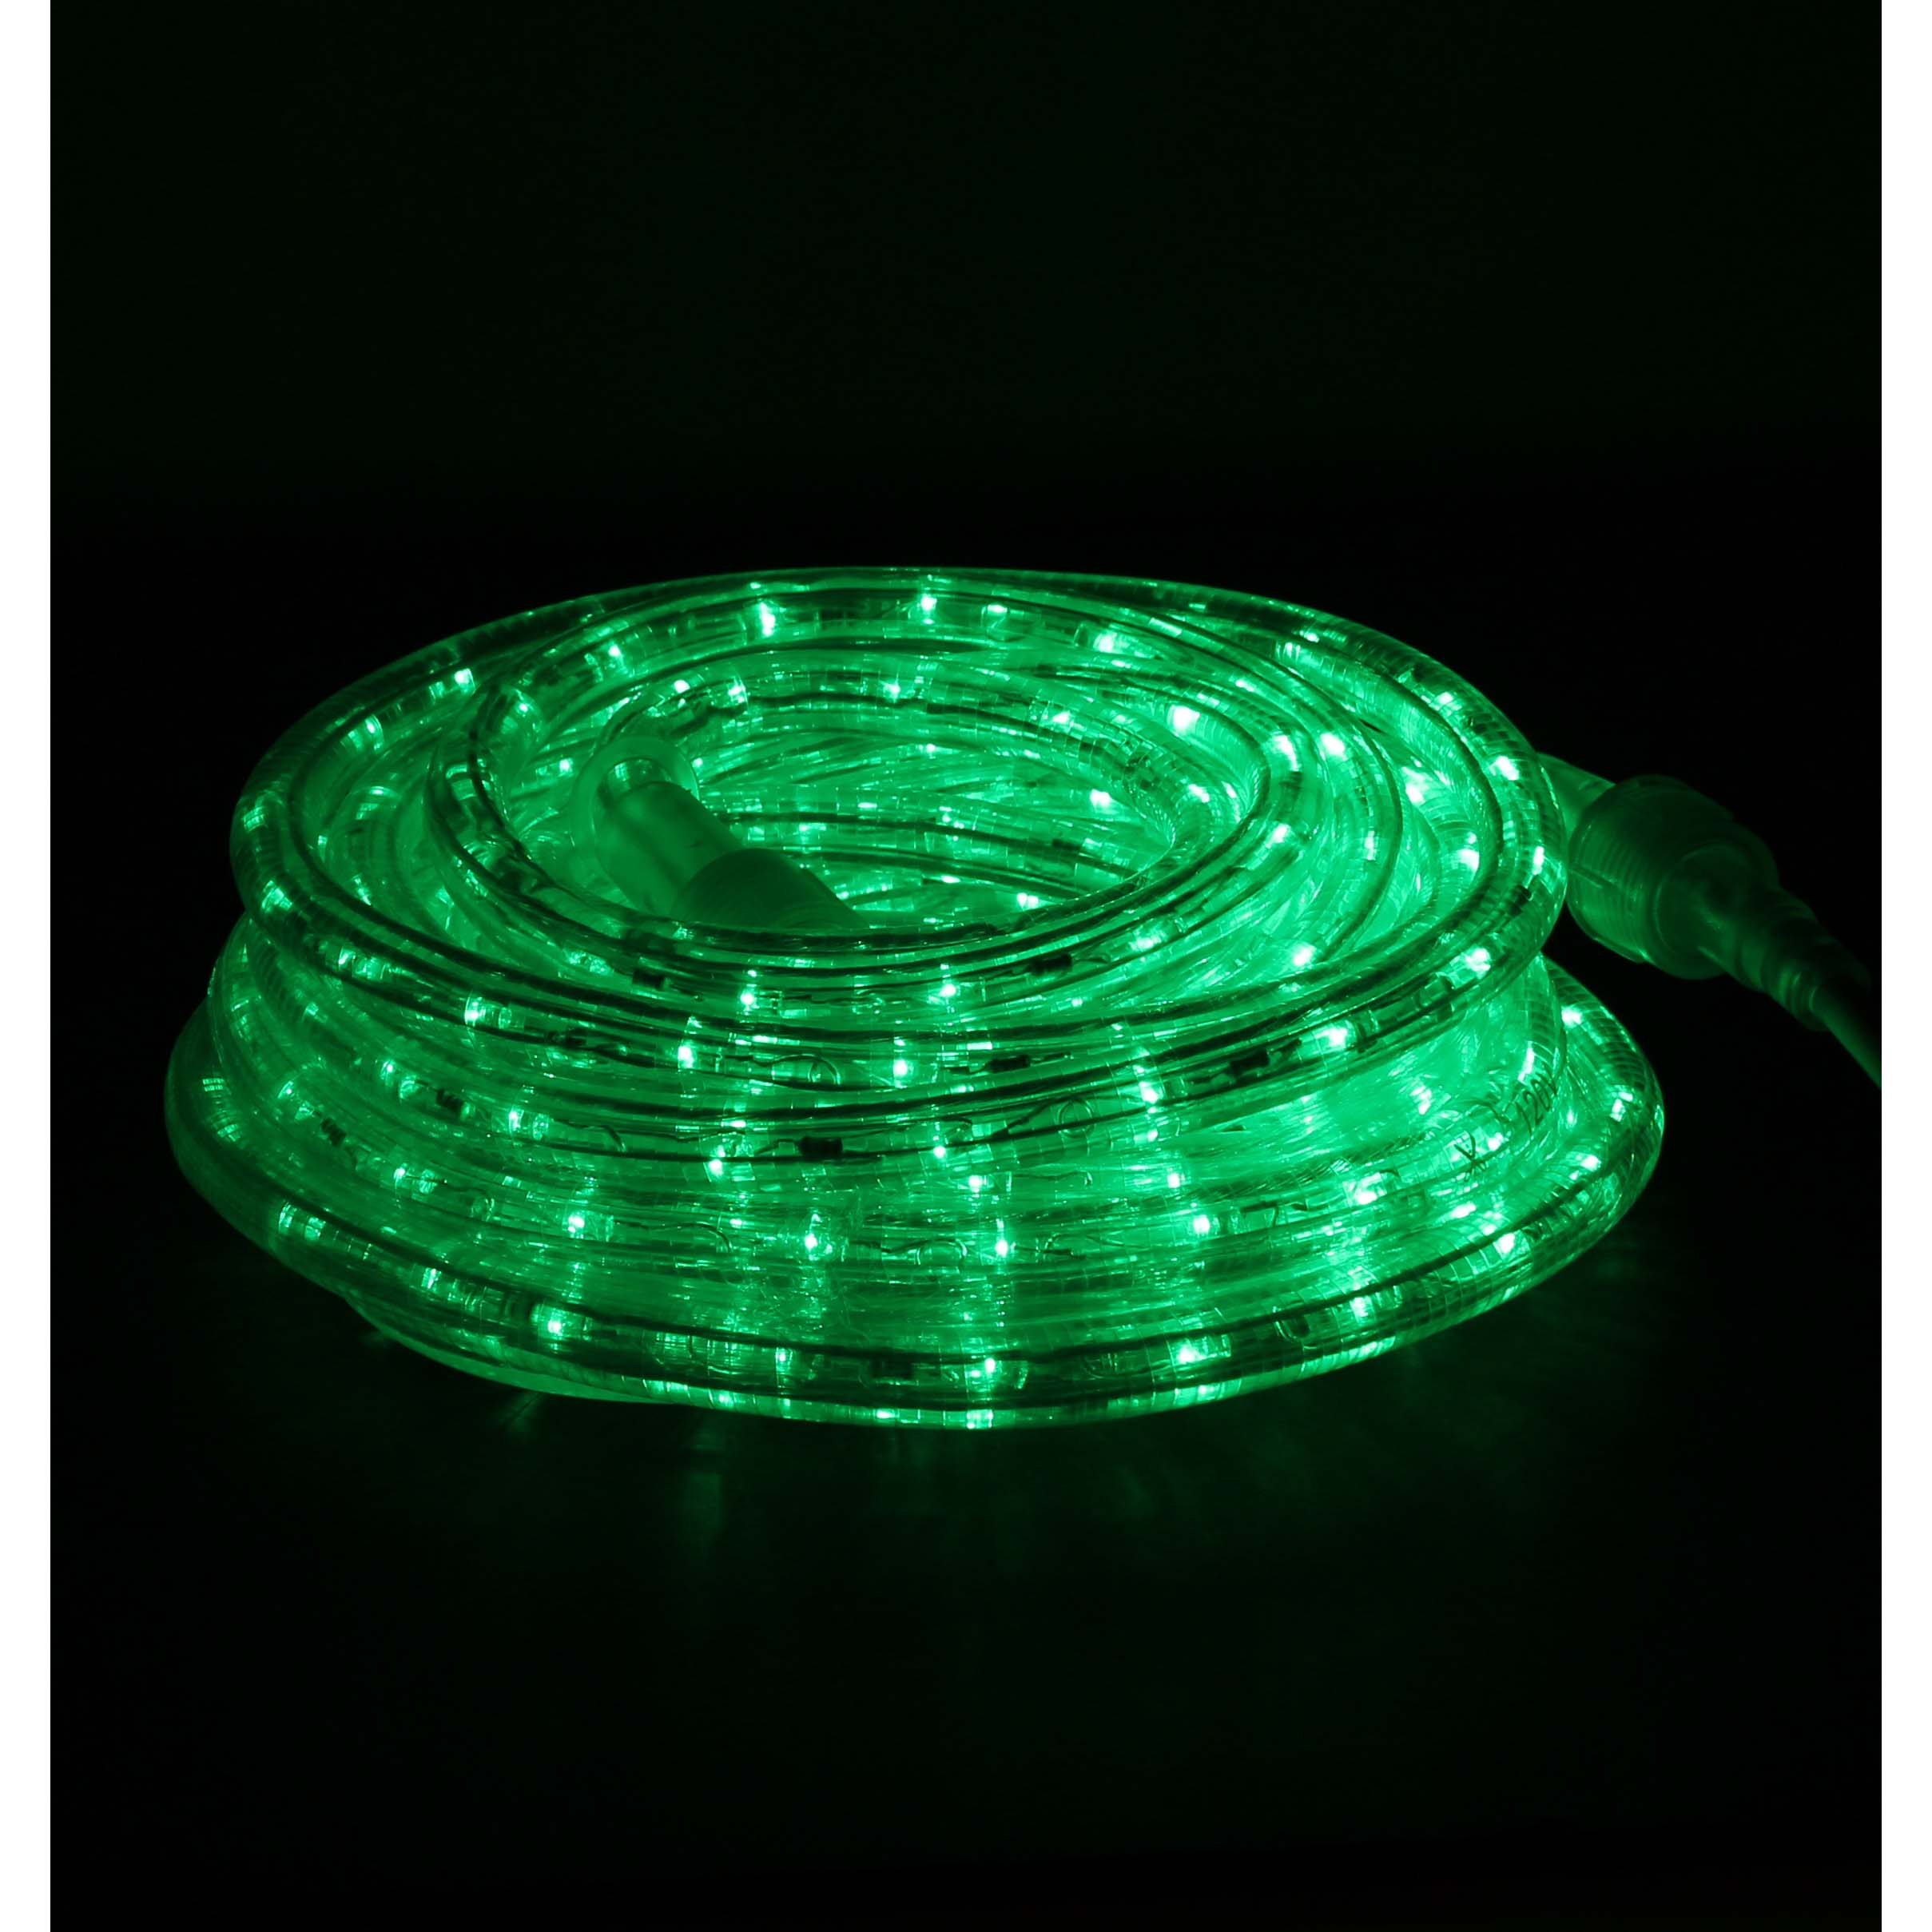  Green  LED Rope Lights  24FT RLWL 24 GREEN  Direct Lighting com